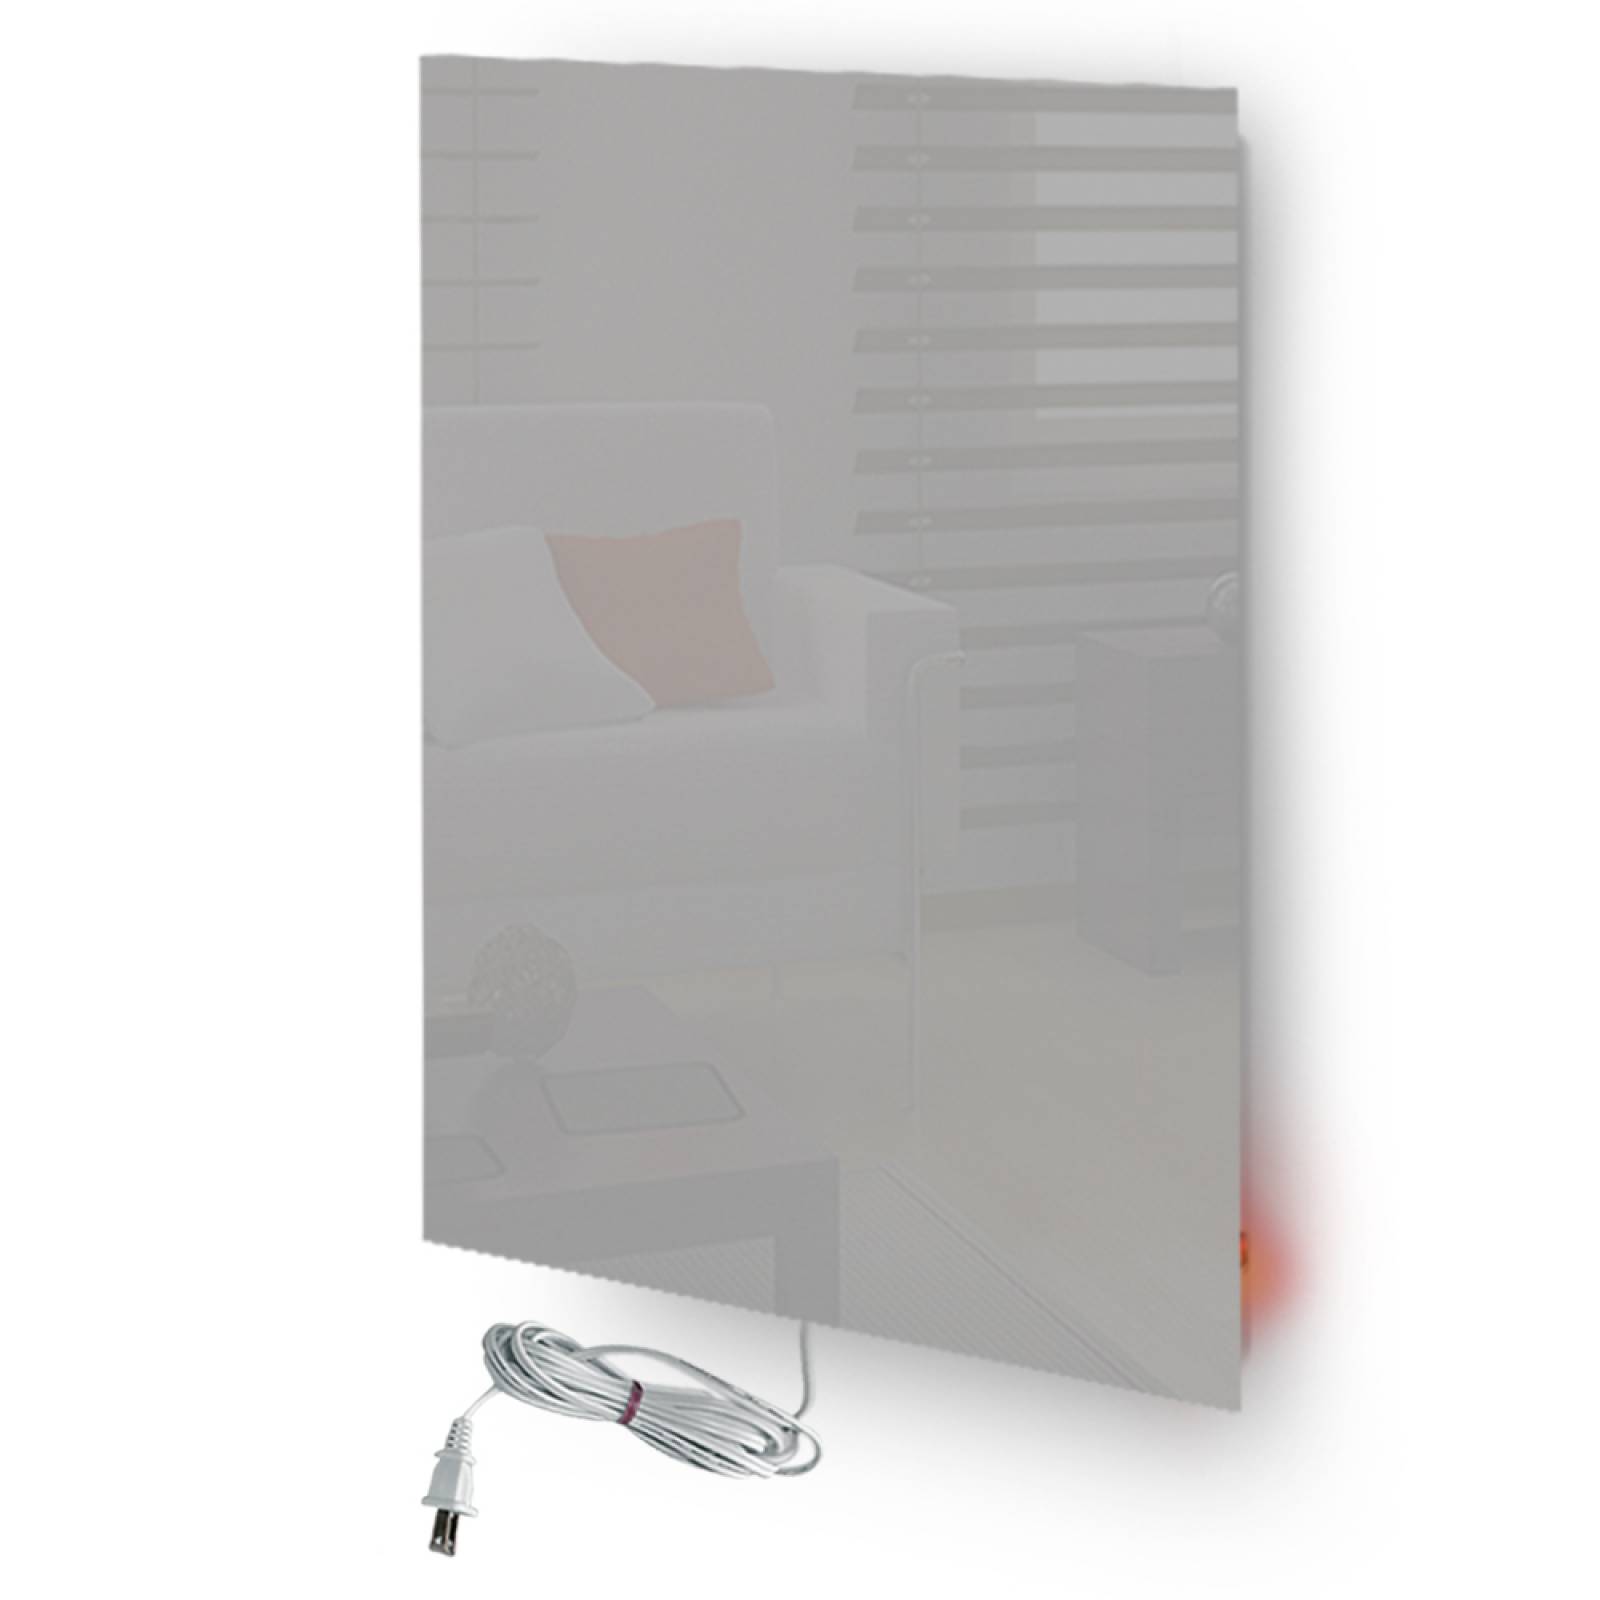 Calefactor de Panel infrarrojo en Cristal Vertical para Pared, Miami Wave White Angel de 550W 60x90cm, Mod: 343CaSol-B3v